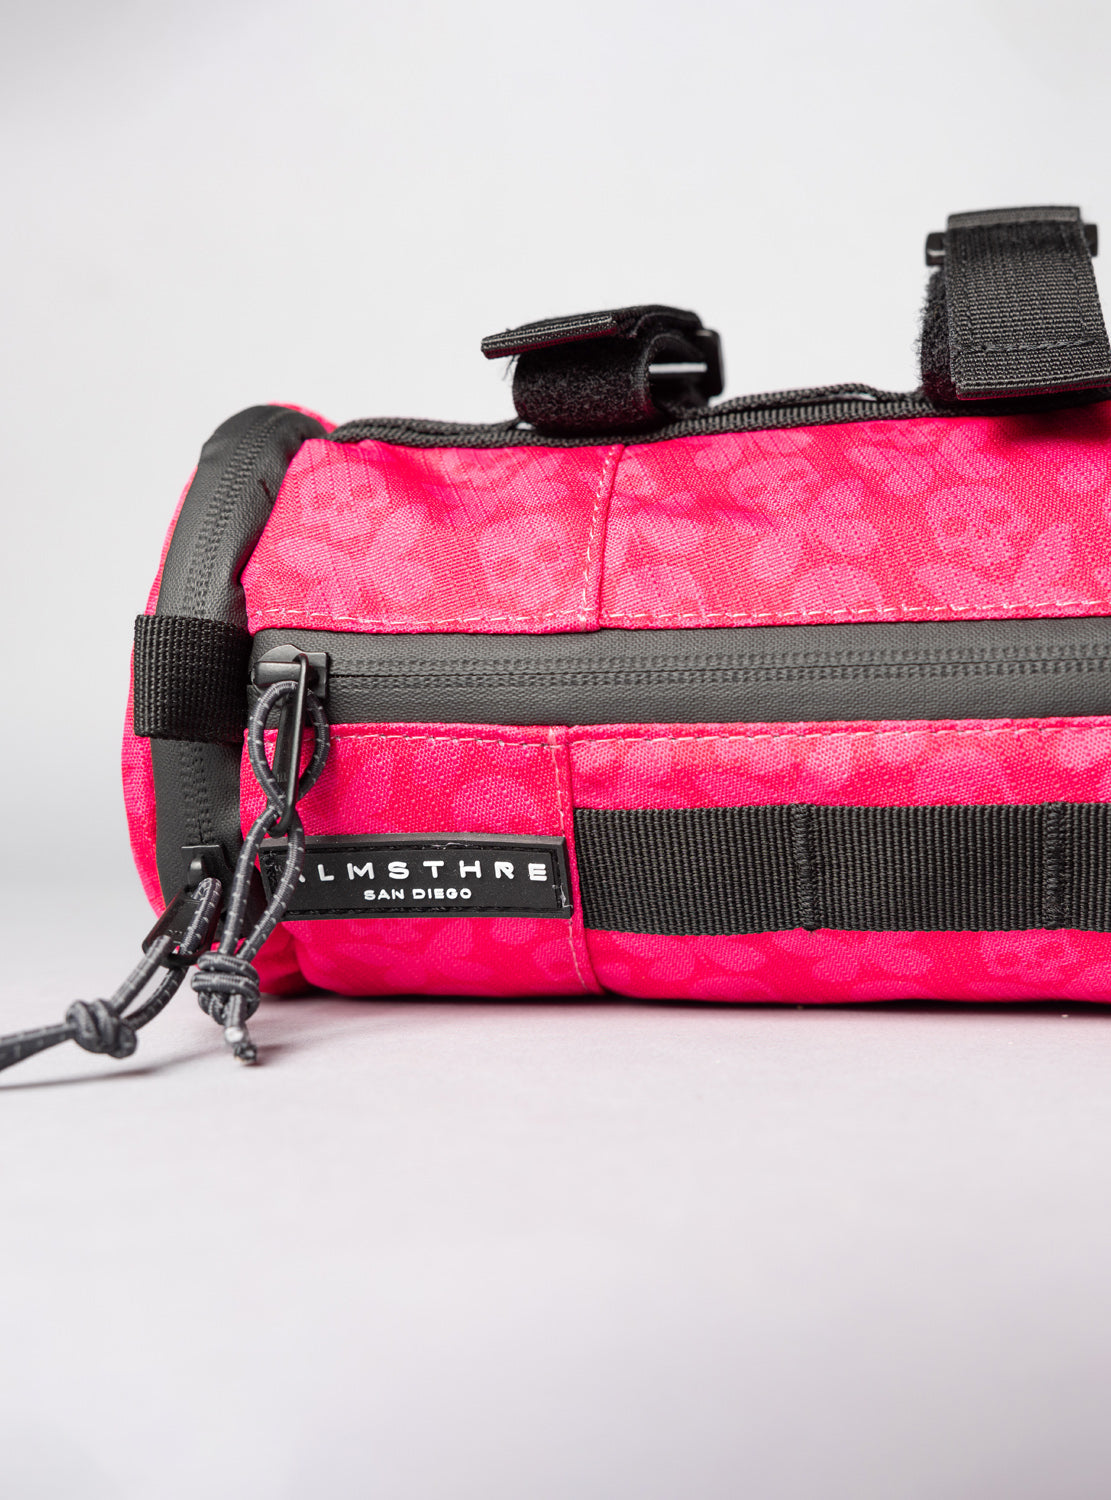 betty designs pink bar bag cycling